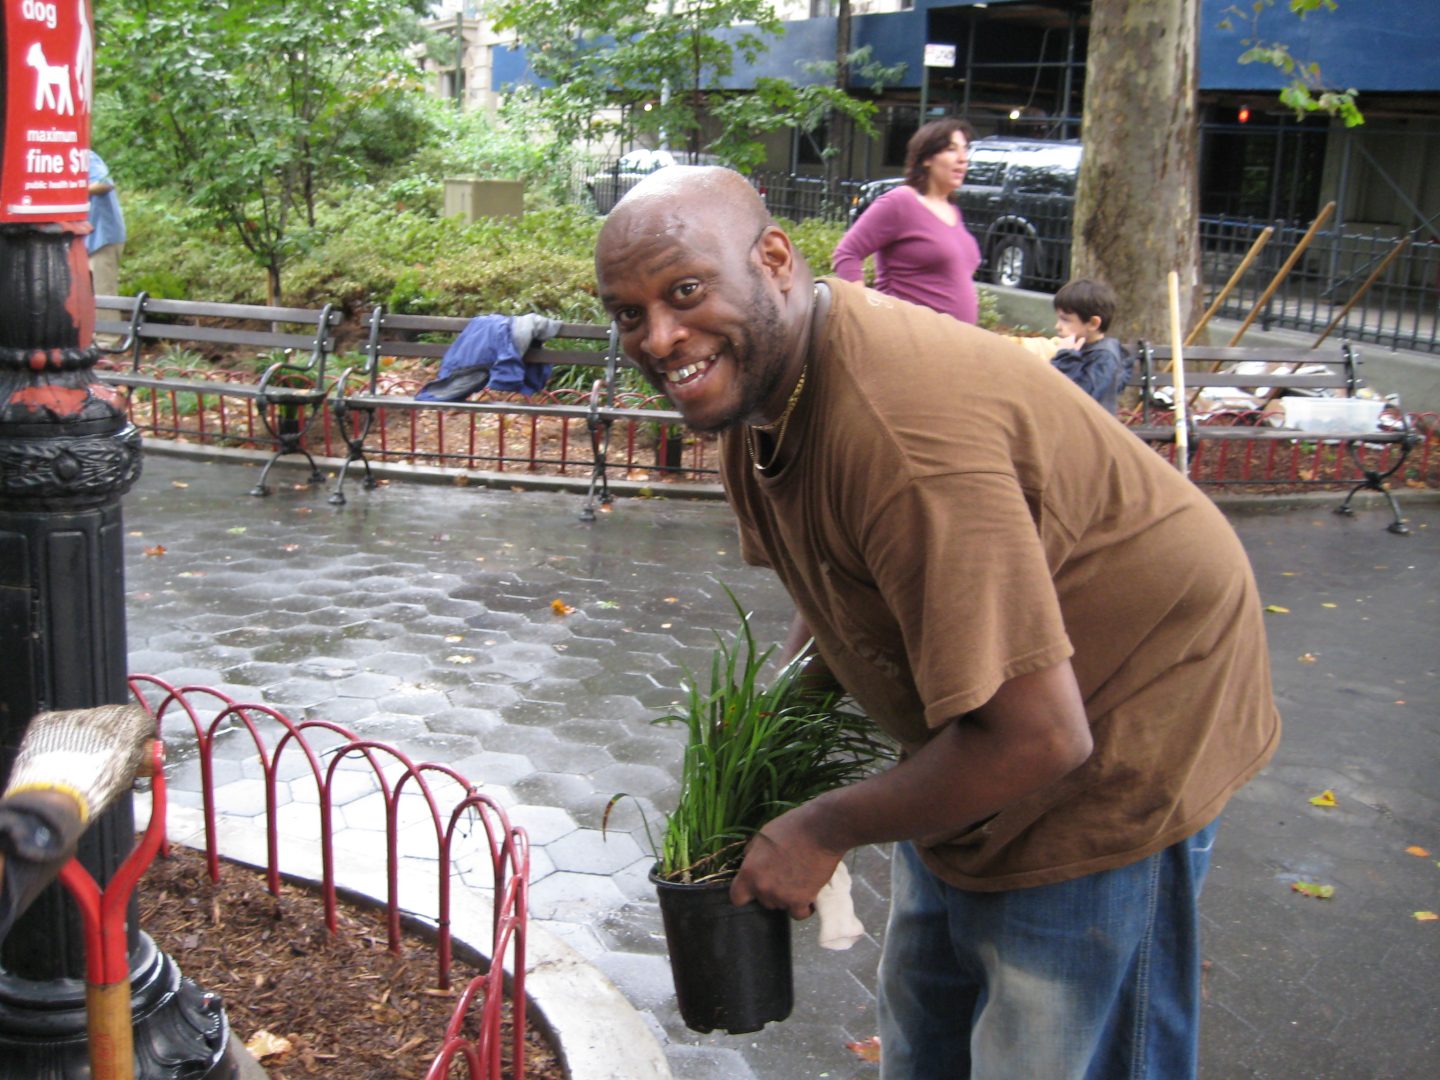 Volunteer holds plant in preparation of planting in garden